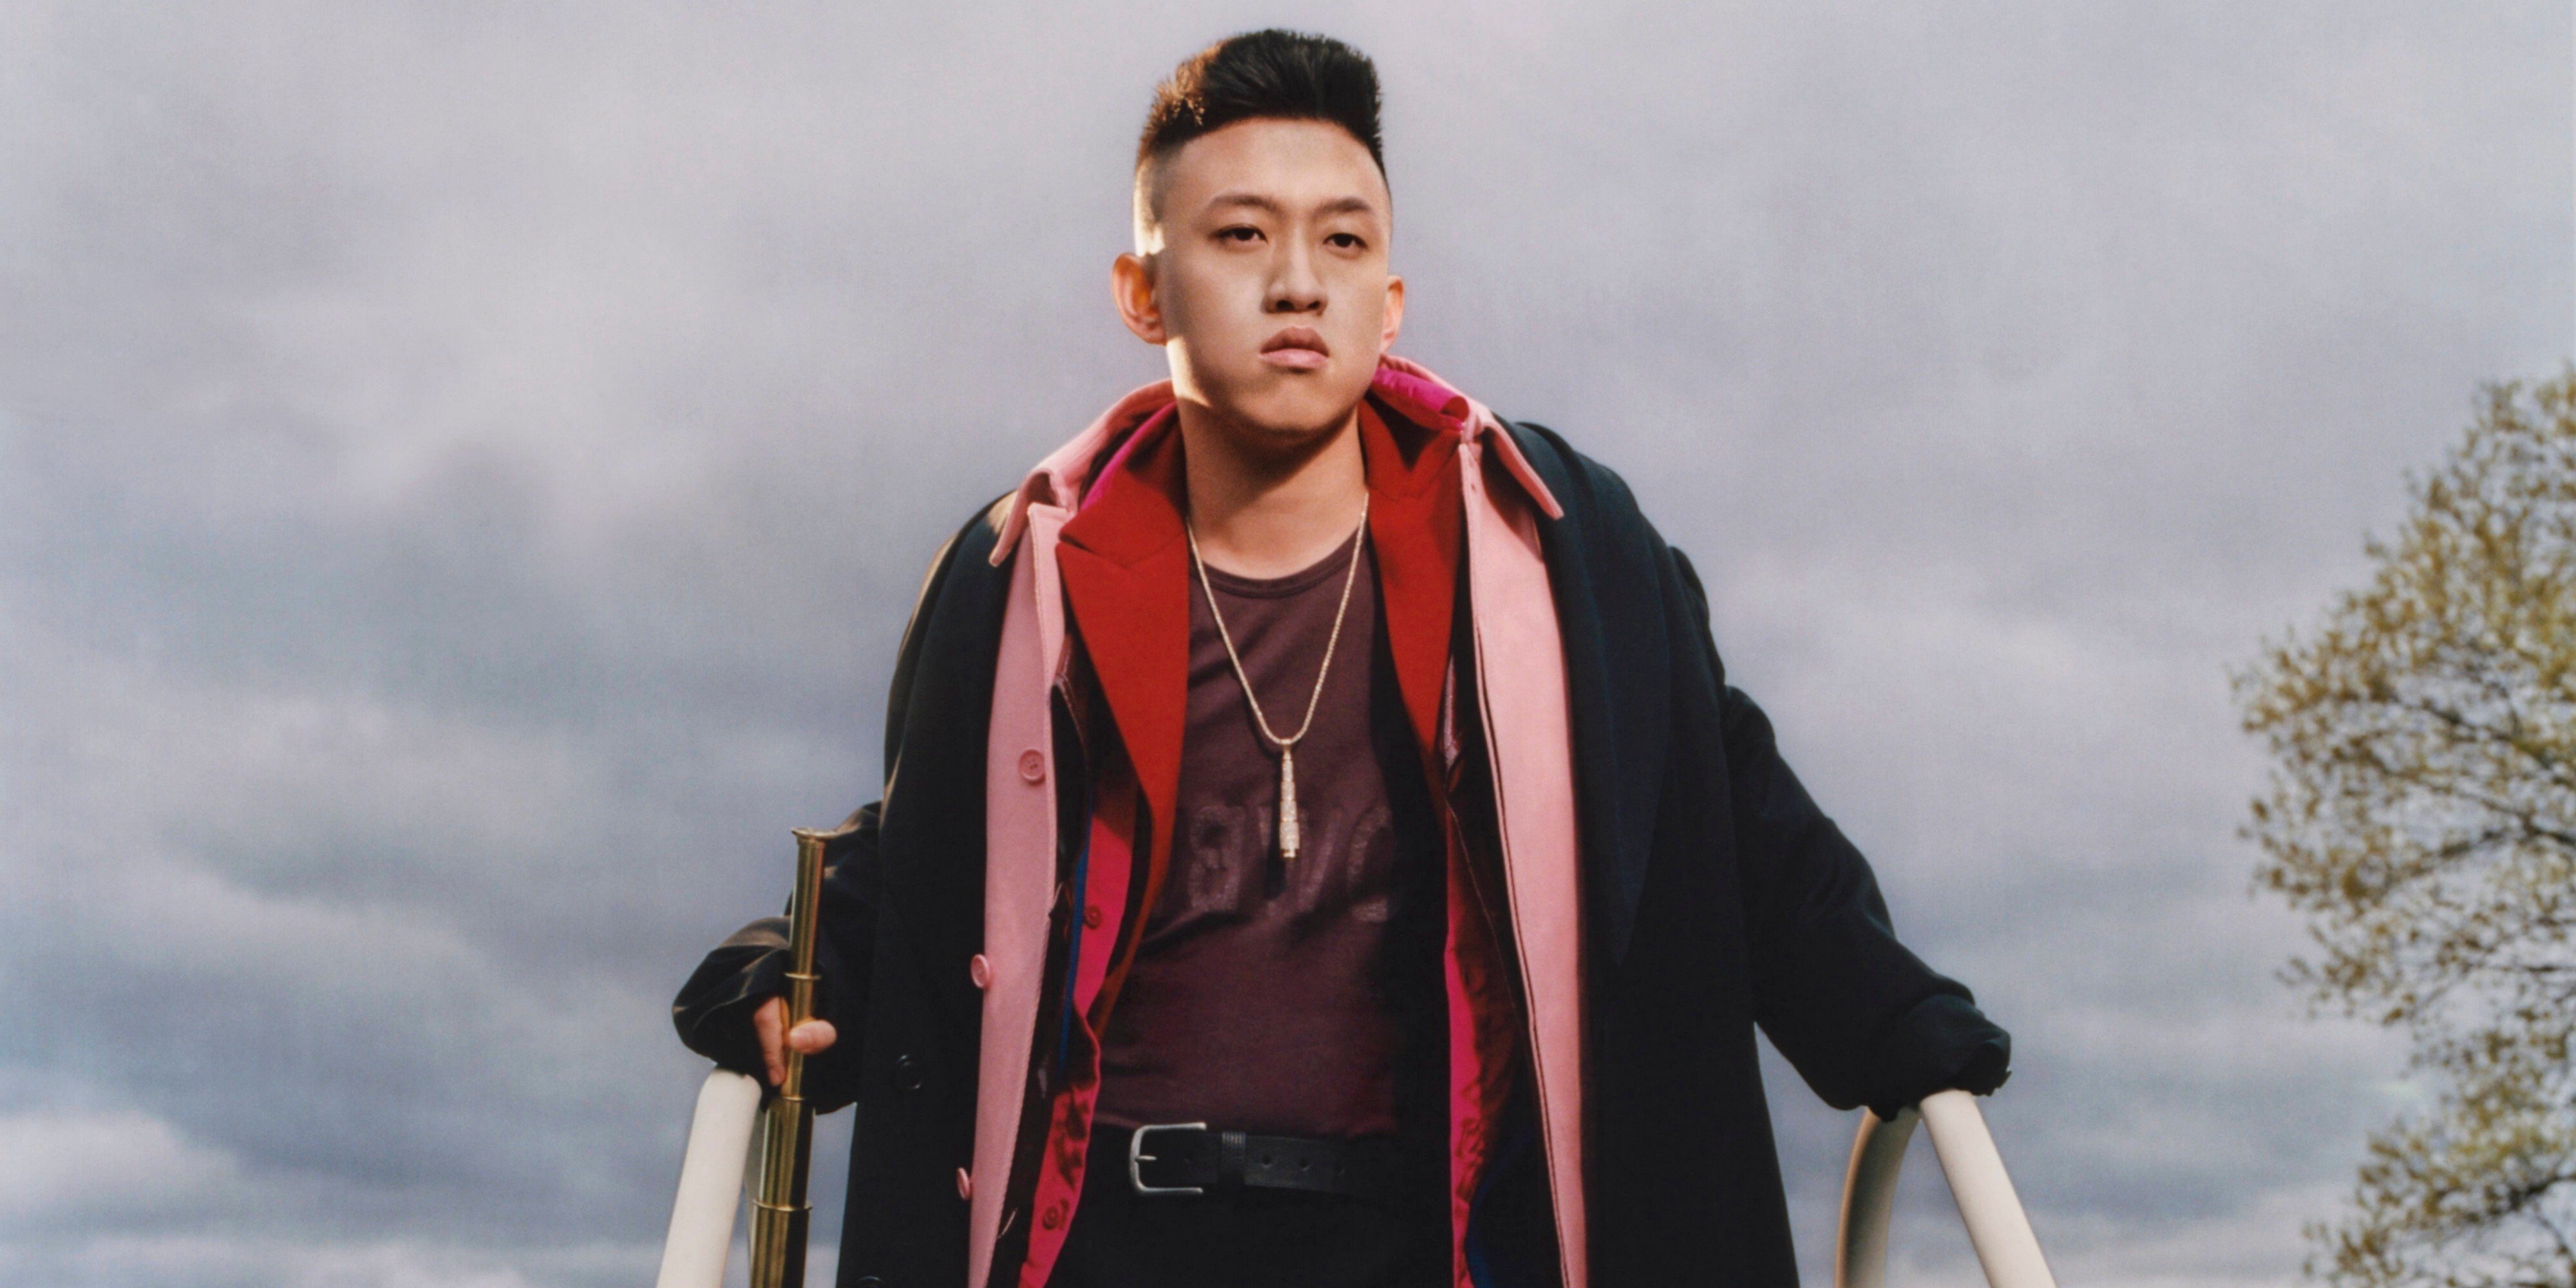 Asian rapper Rich Brian is proving he belongs in the hip-hop world.